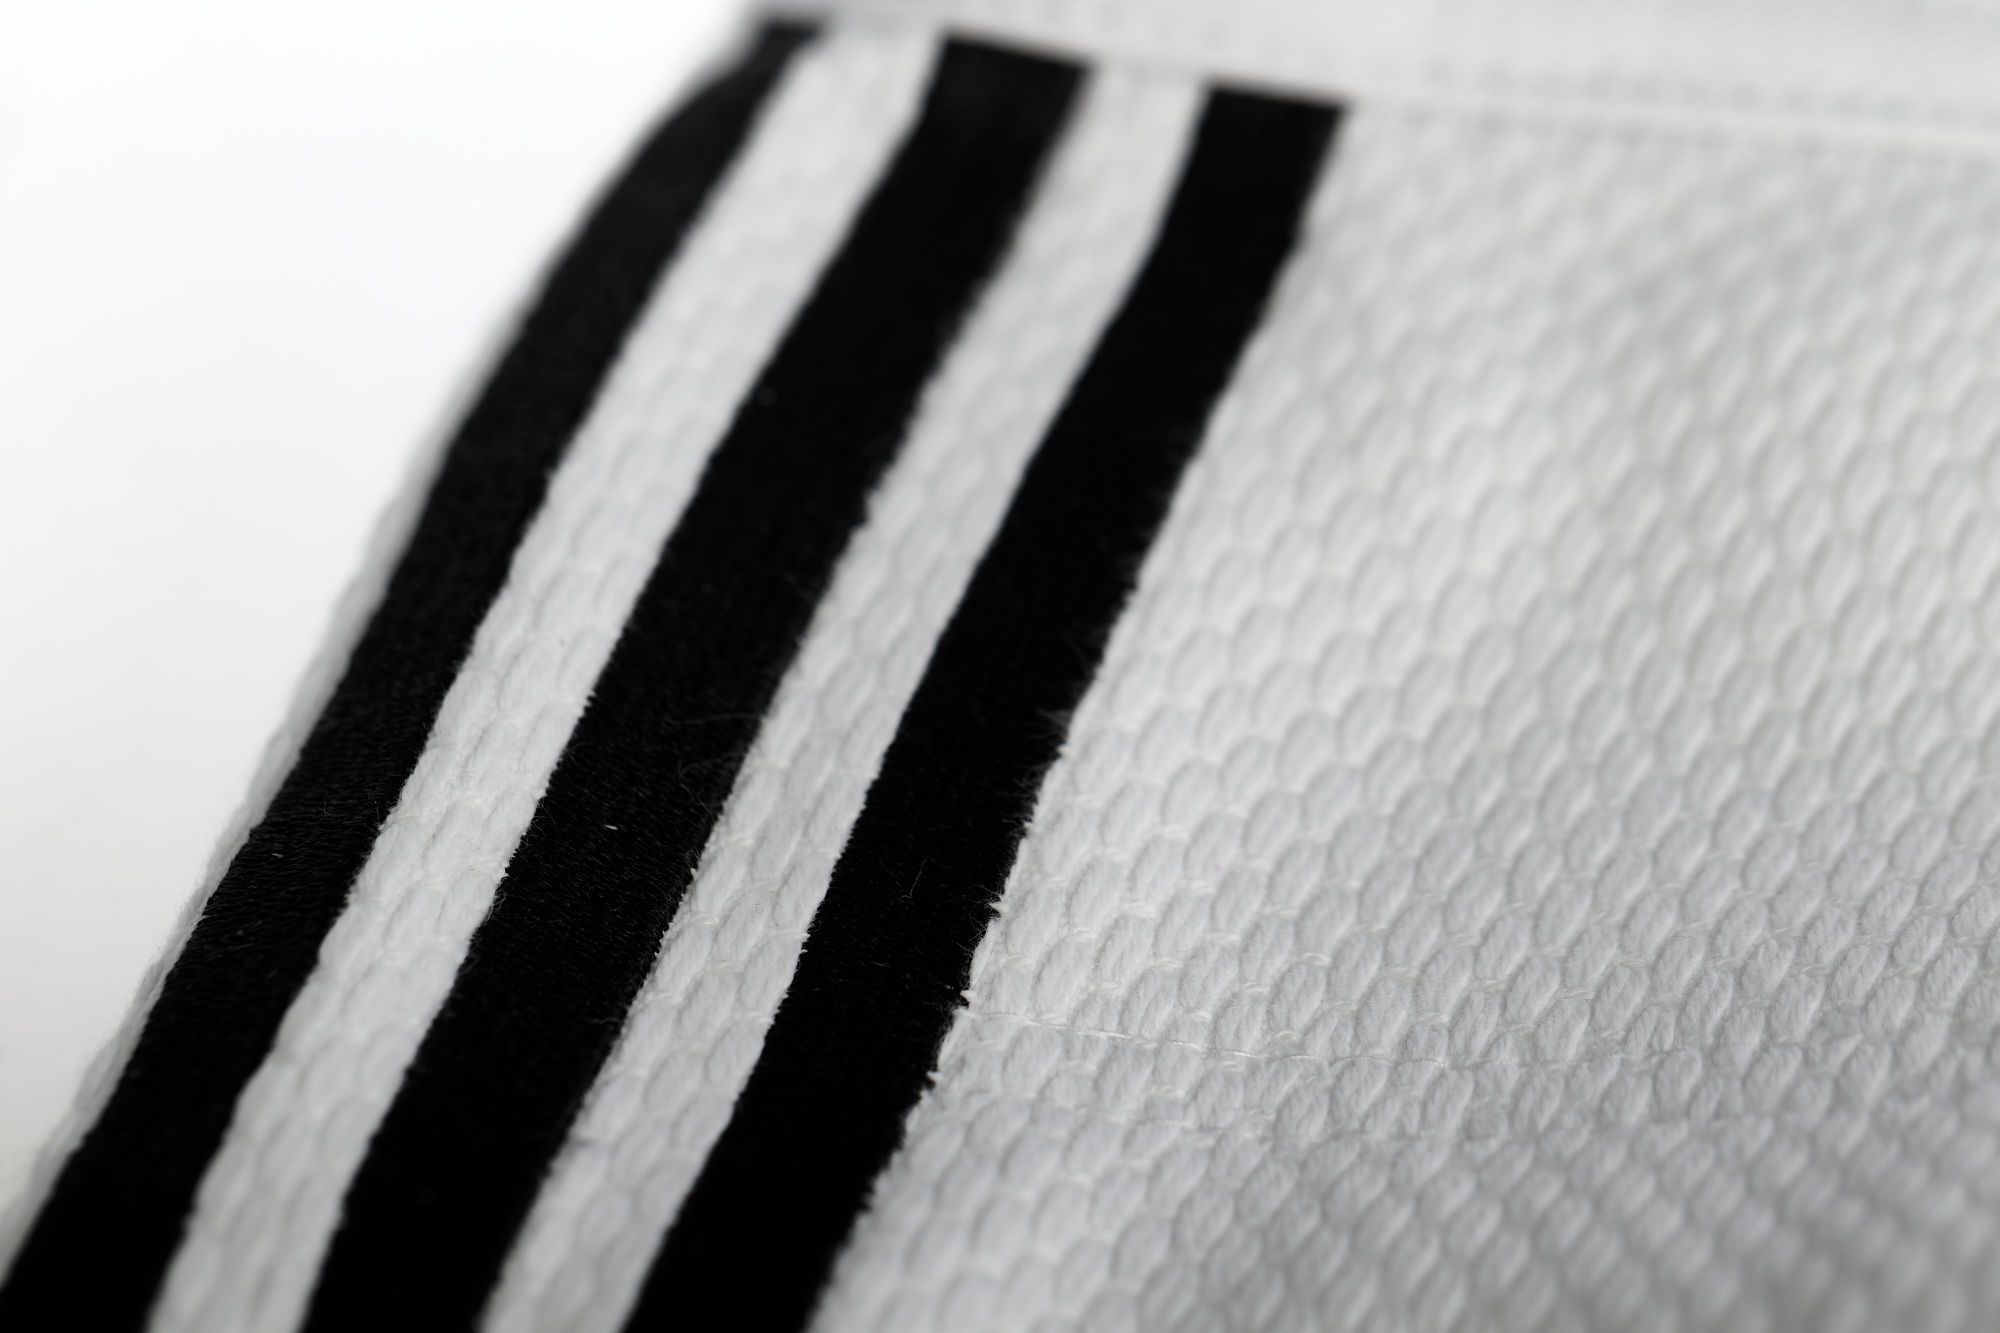 adidas judo gi Champion III JIJF-2 white / black stripes